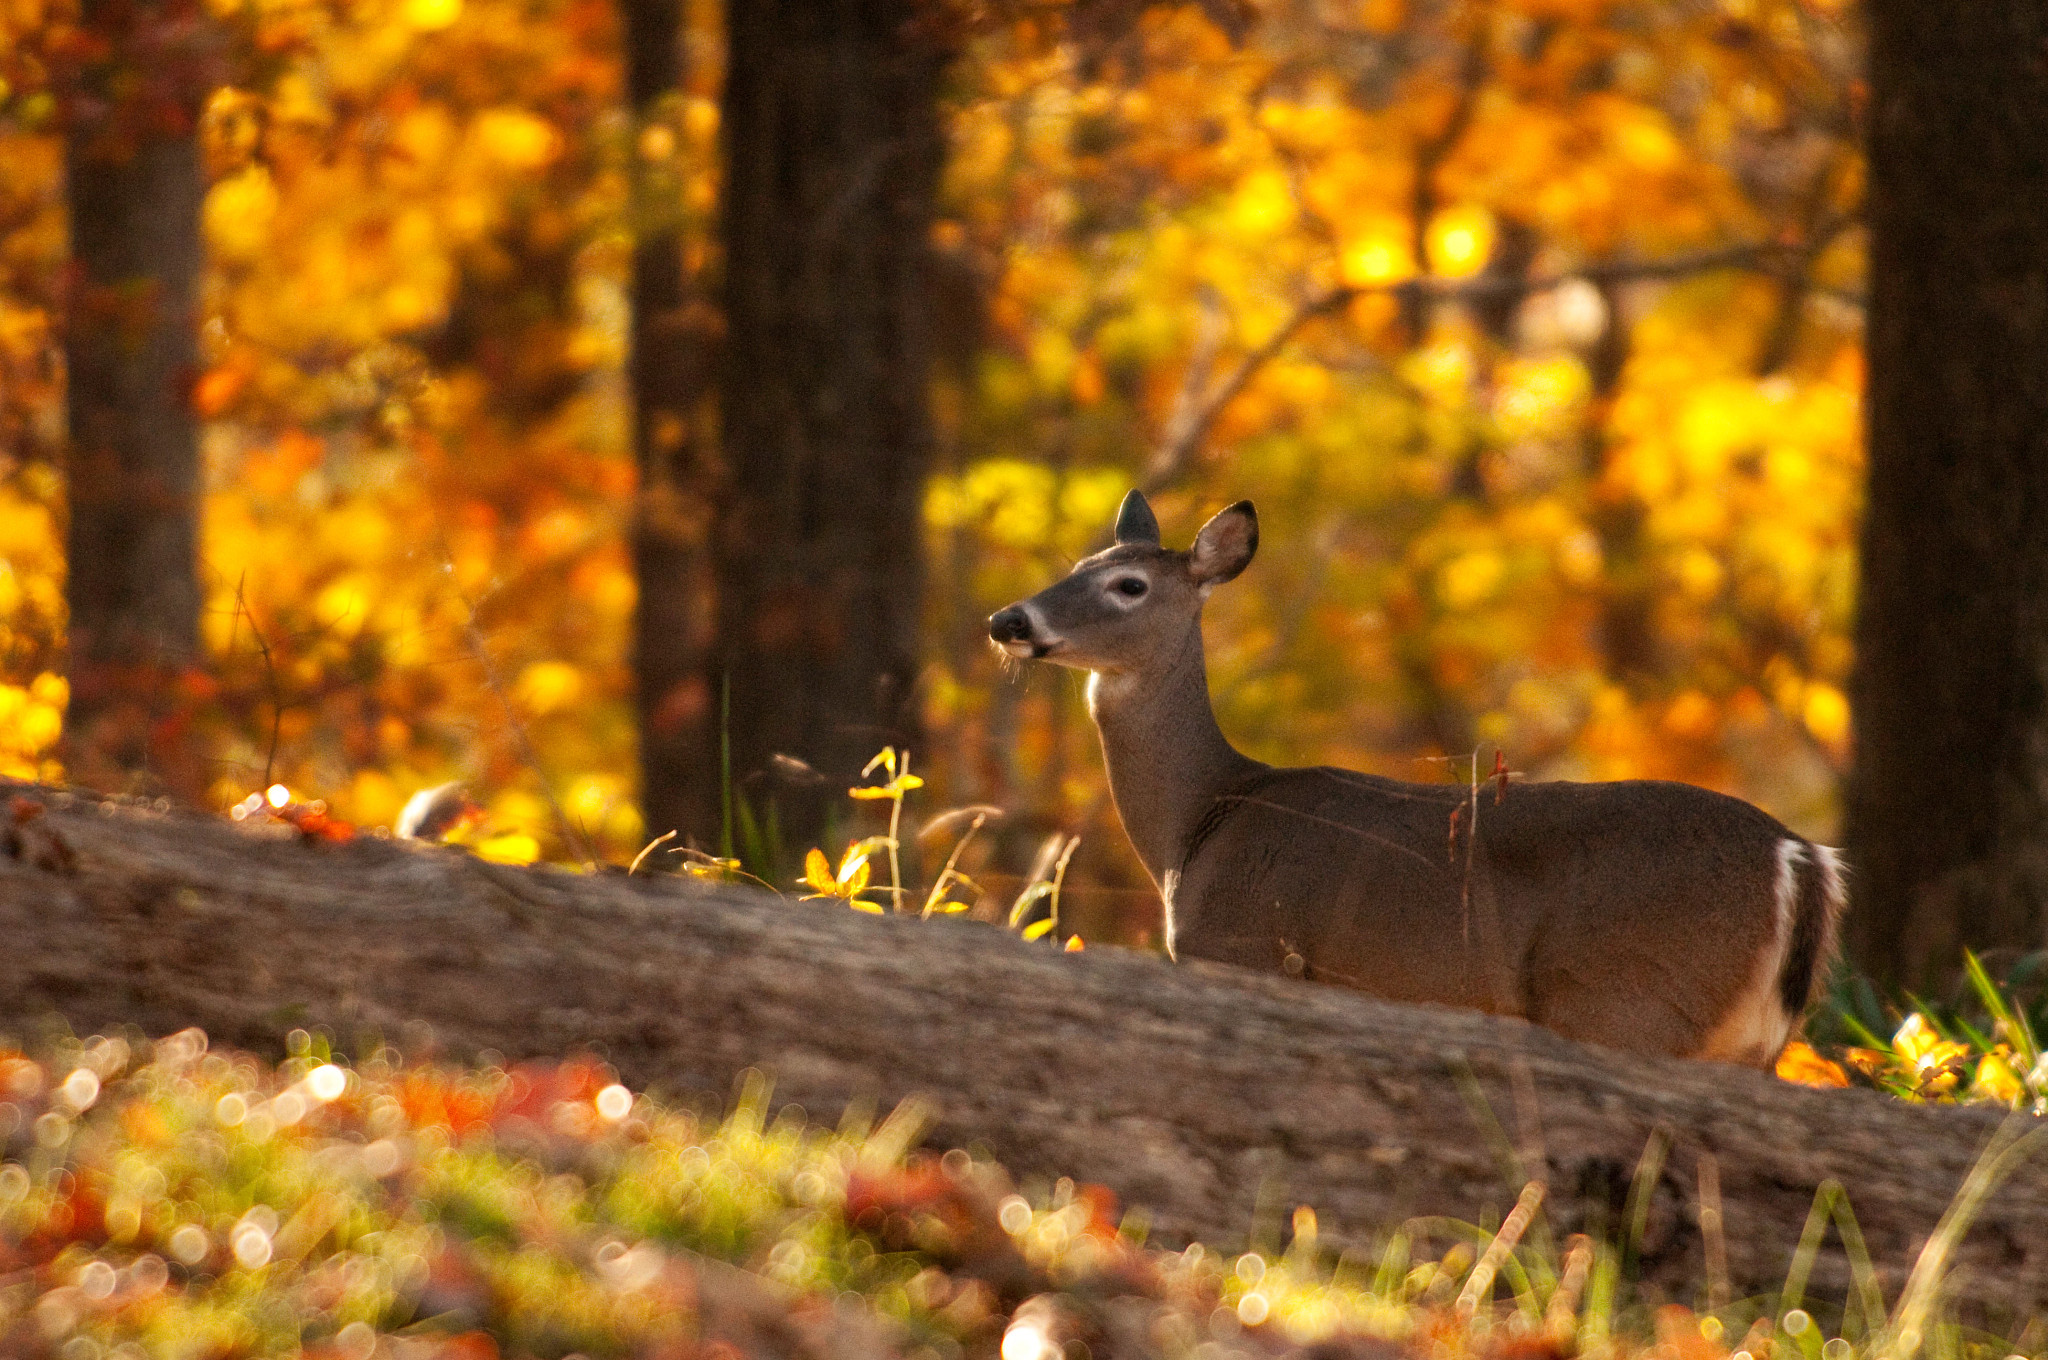 doe standing behind fallen log amidst vivid fall foliage